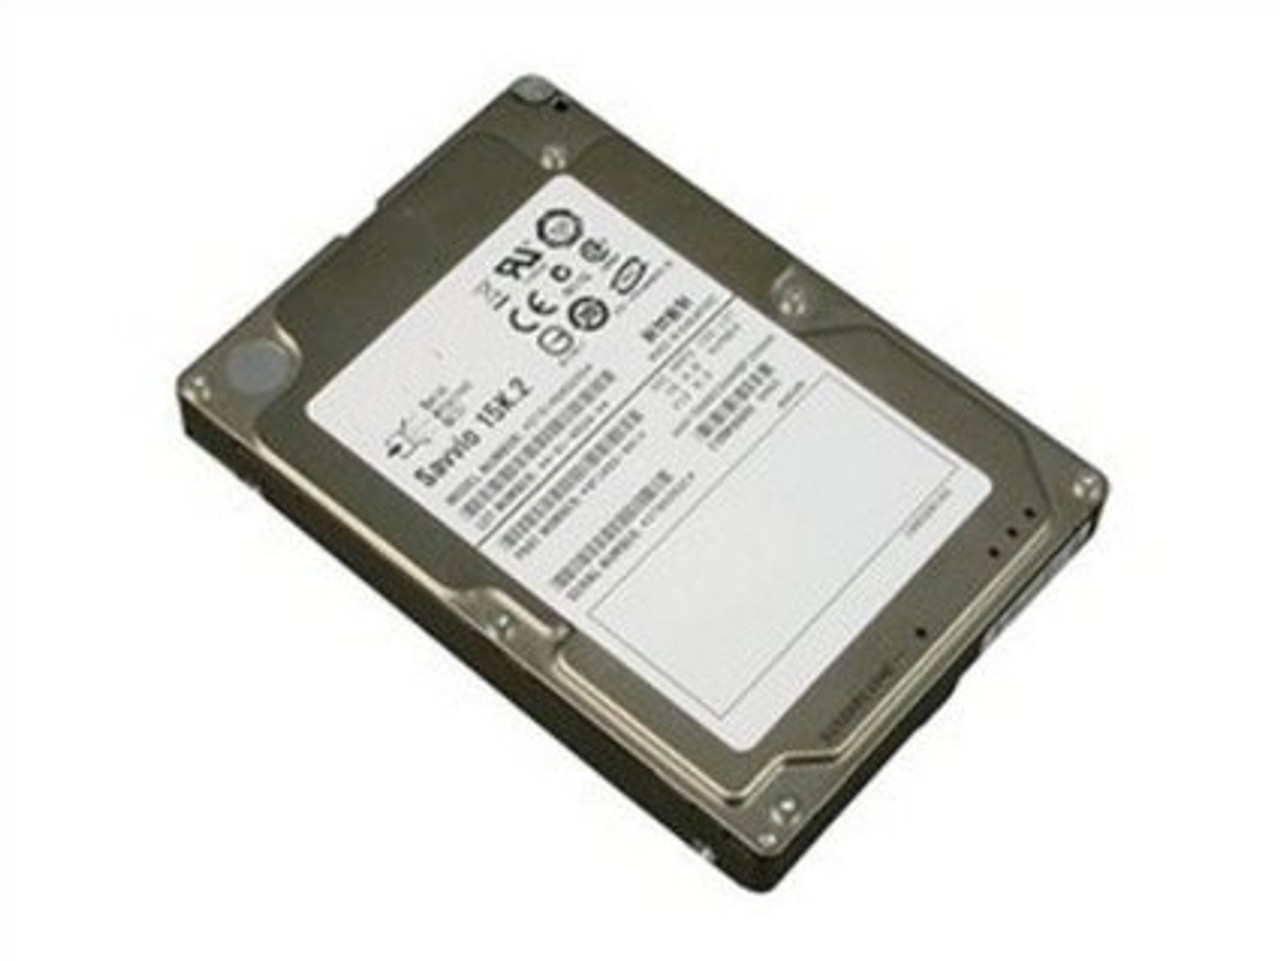 E100S-Ssd200-Emlc= | Cisco | 200 Gb, Sas Emlc Ssd Hard Disk Drive For